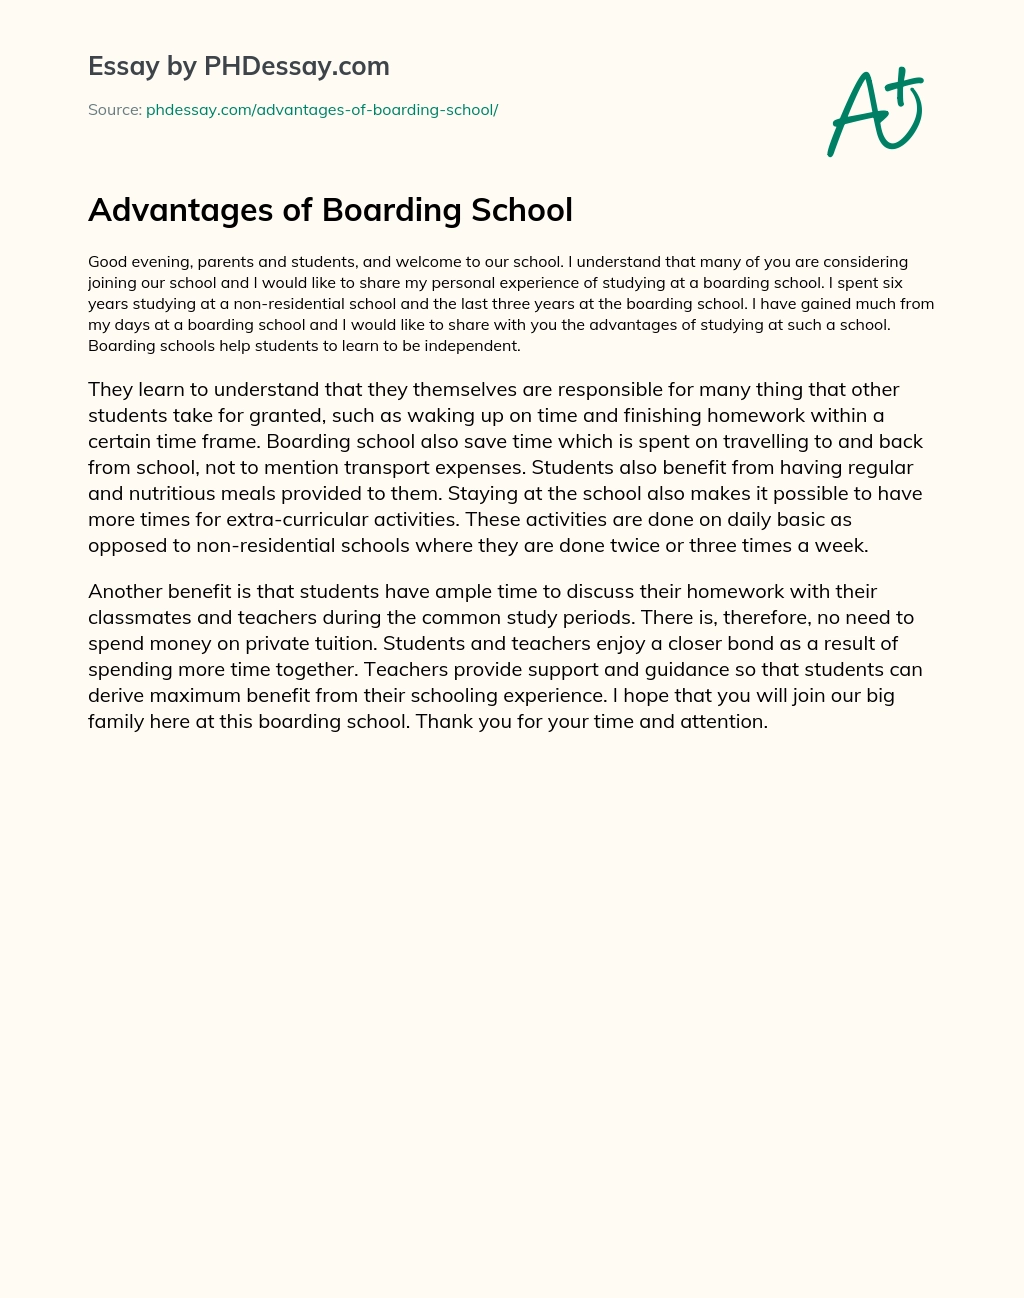 Advantages of Boarding School essay